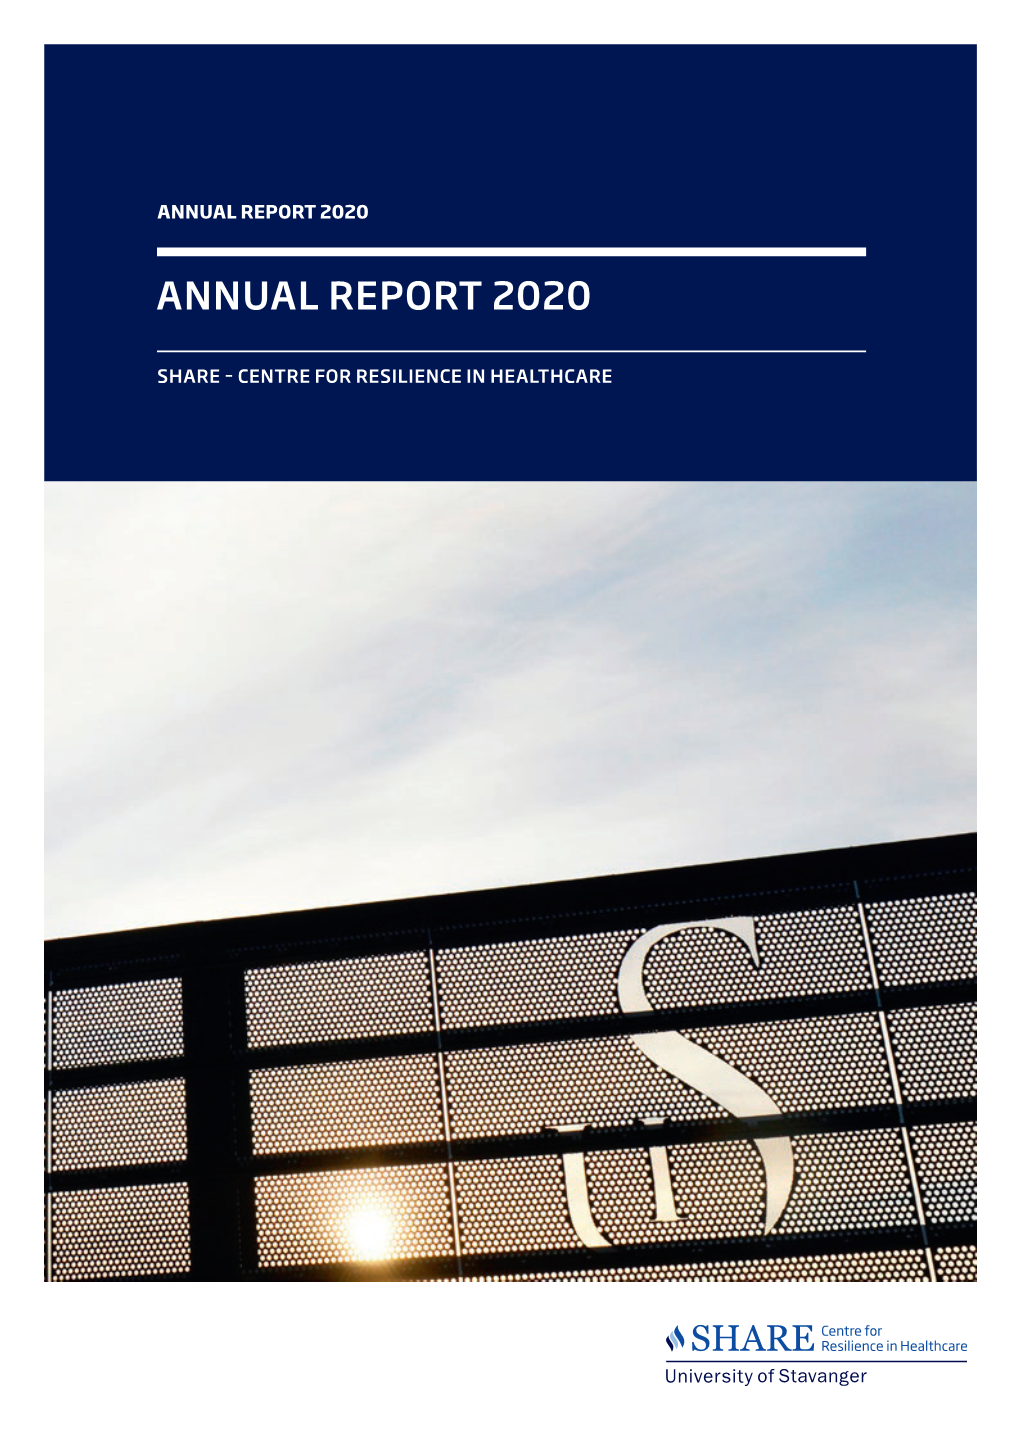 Annual Report SHARE 2020